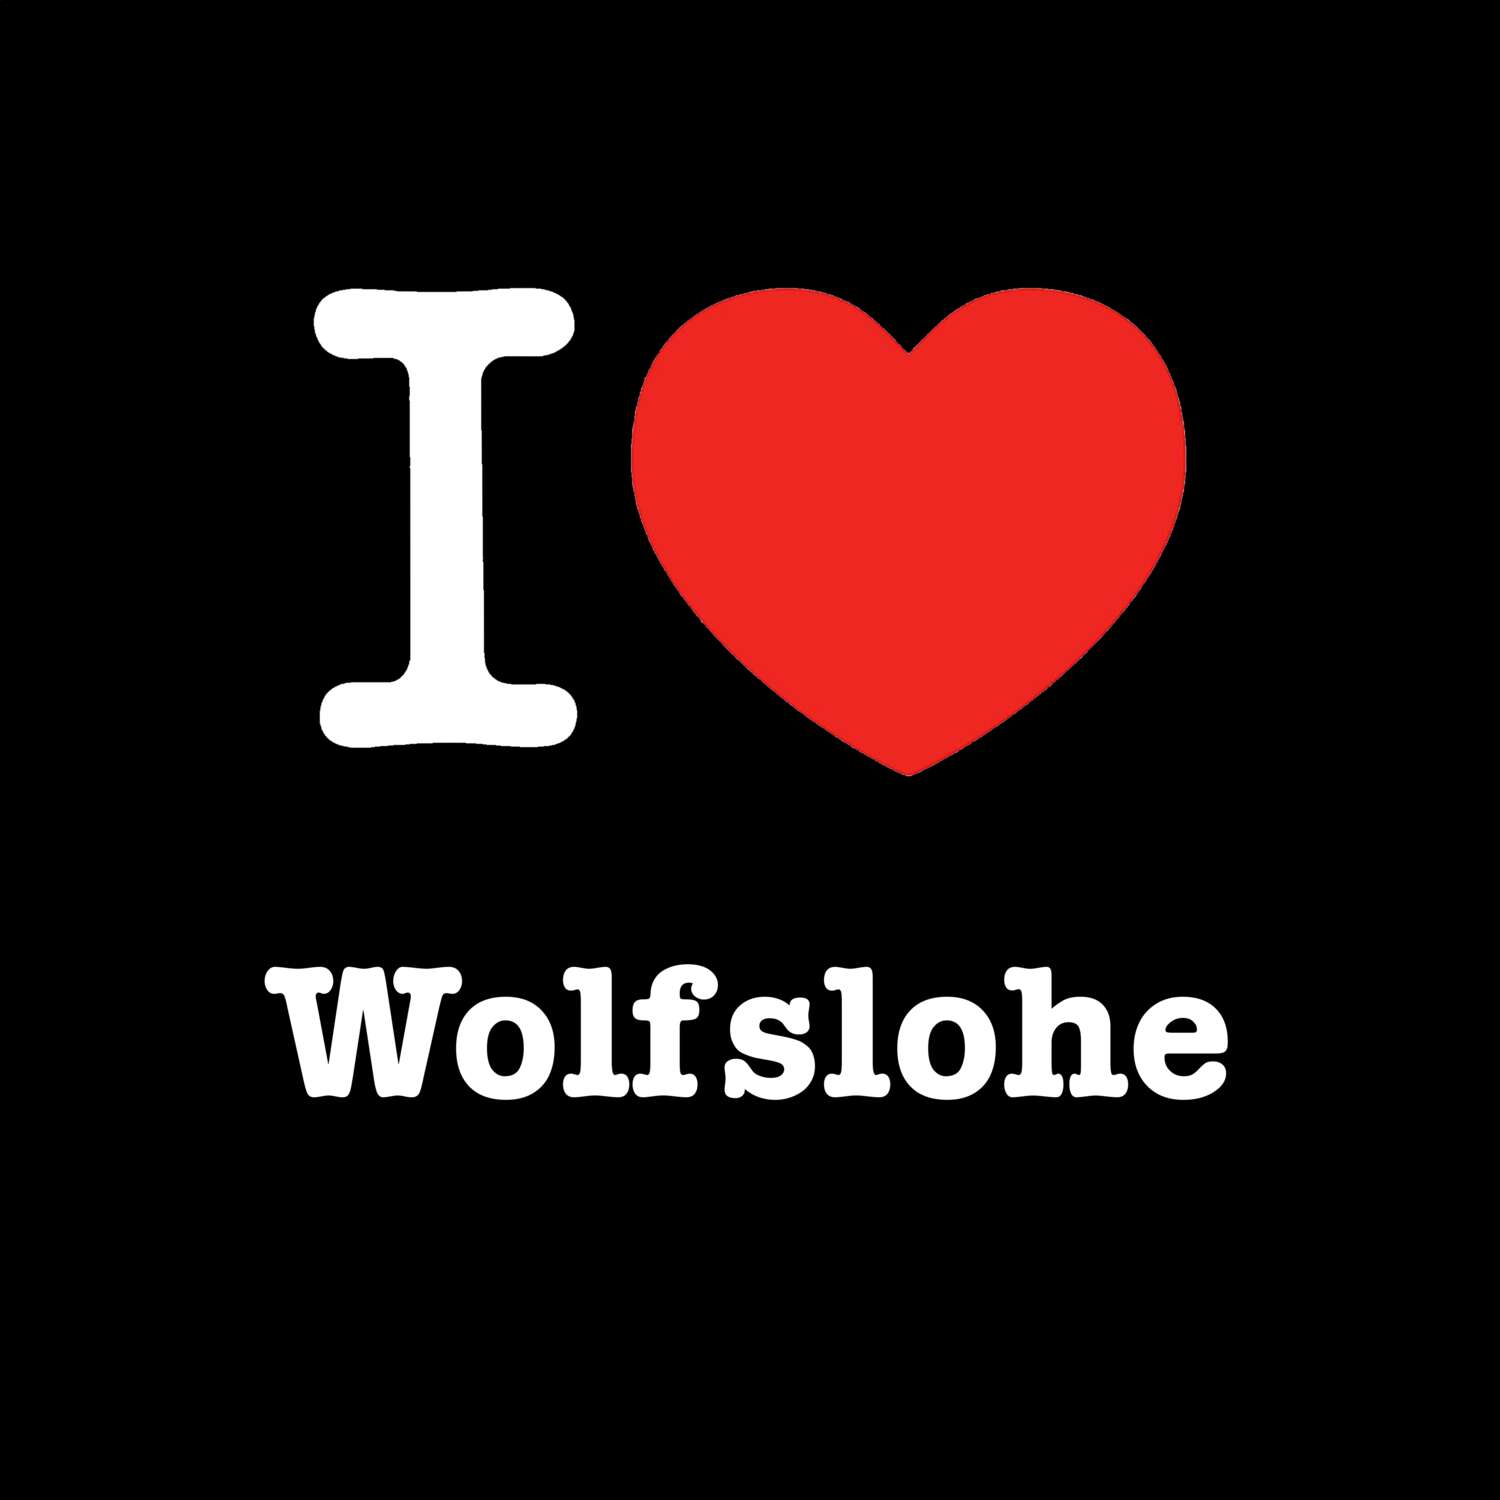 Wolfslohe T-Shirt »I love«